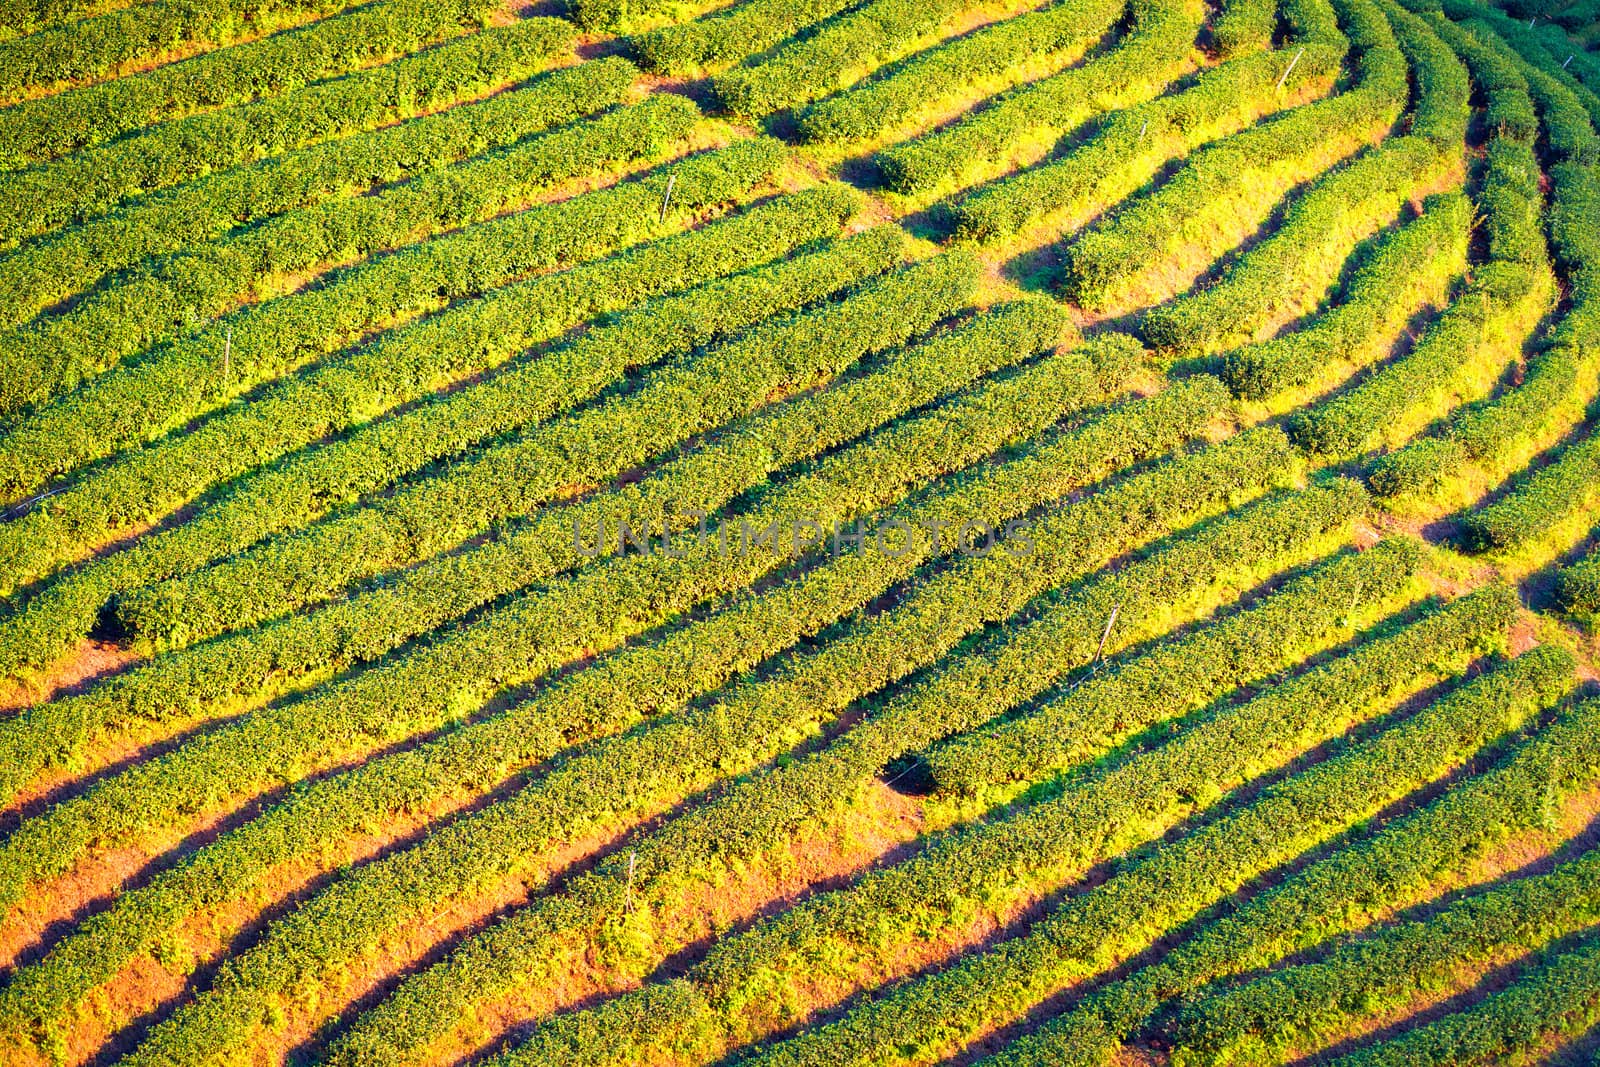 Tea plantation in village Mae Salong, Chiang Mai province, Thailand